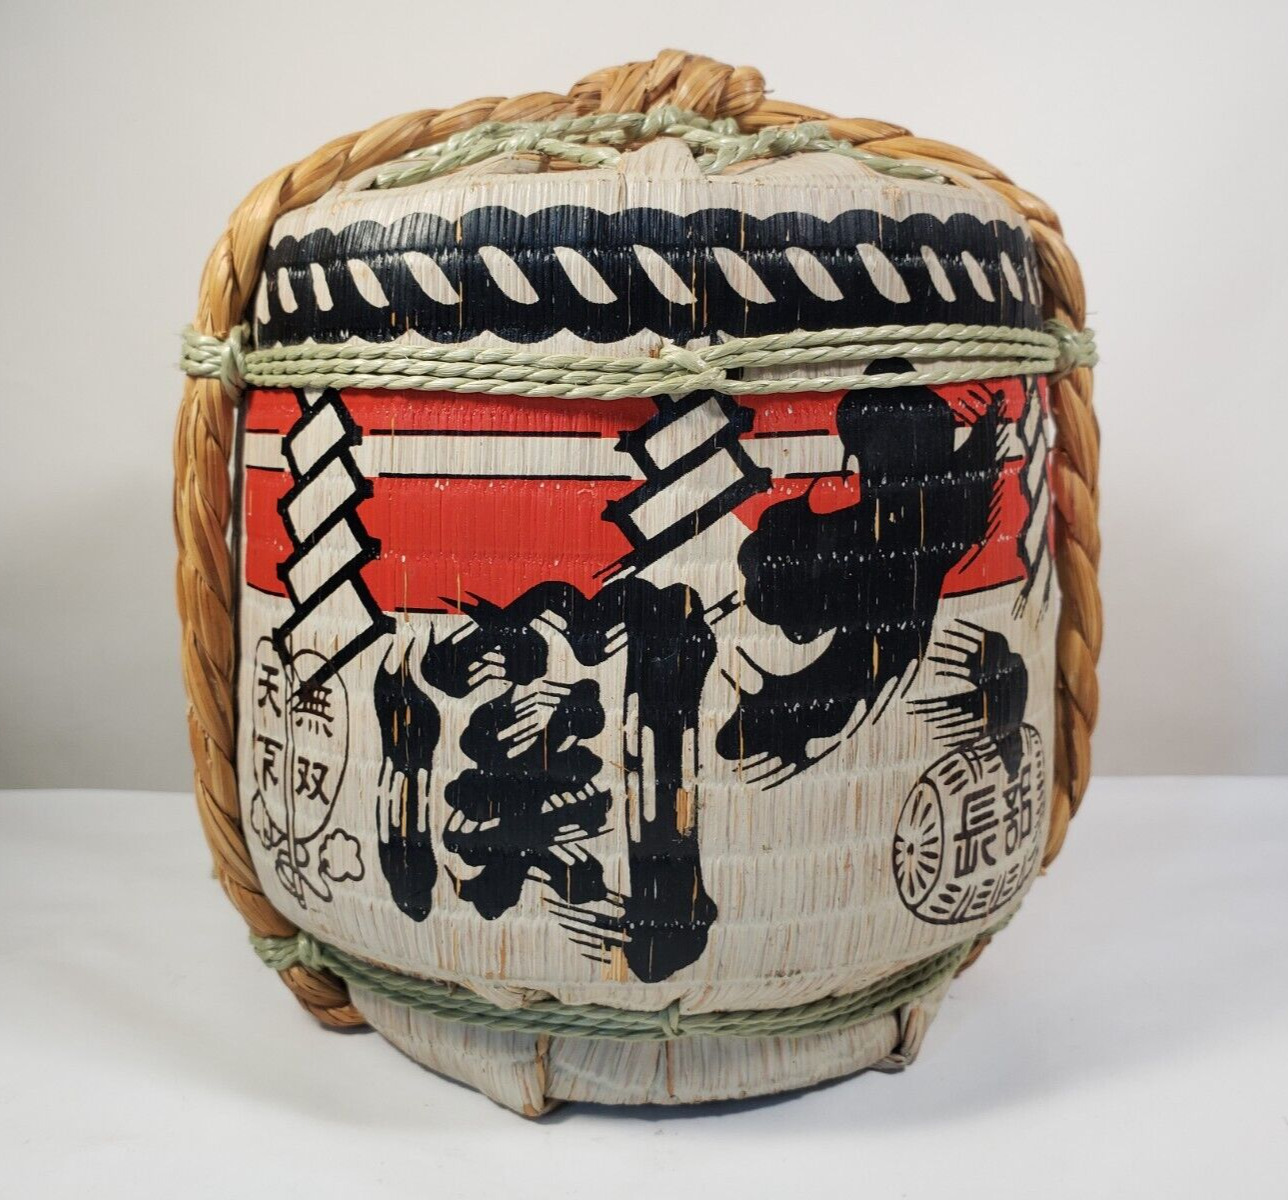 Vintage Japanese Sake Crock Barrel Jug Bamboo Reed Rope Cask Japan READ